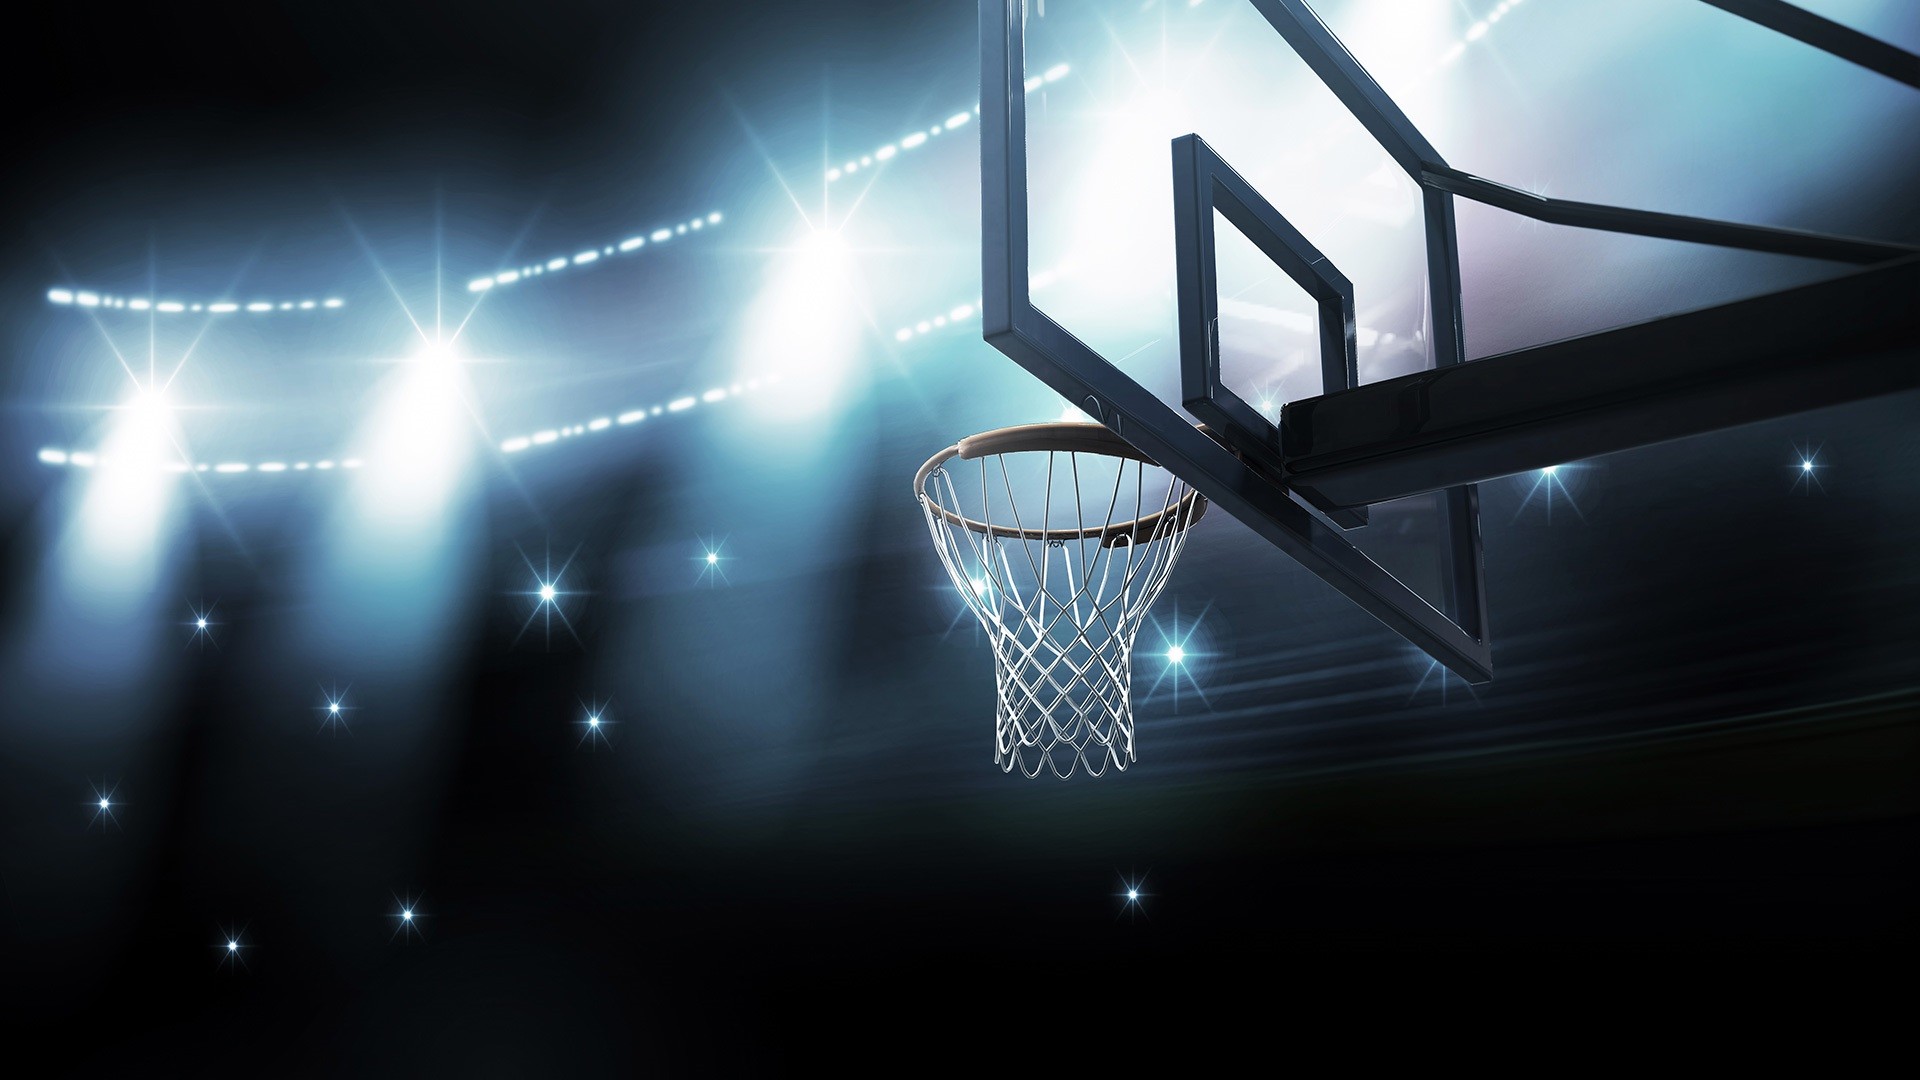 Basketball wallpaper ·① Download free stunning wallpapers ...